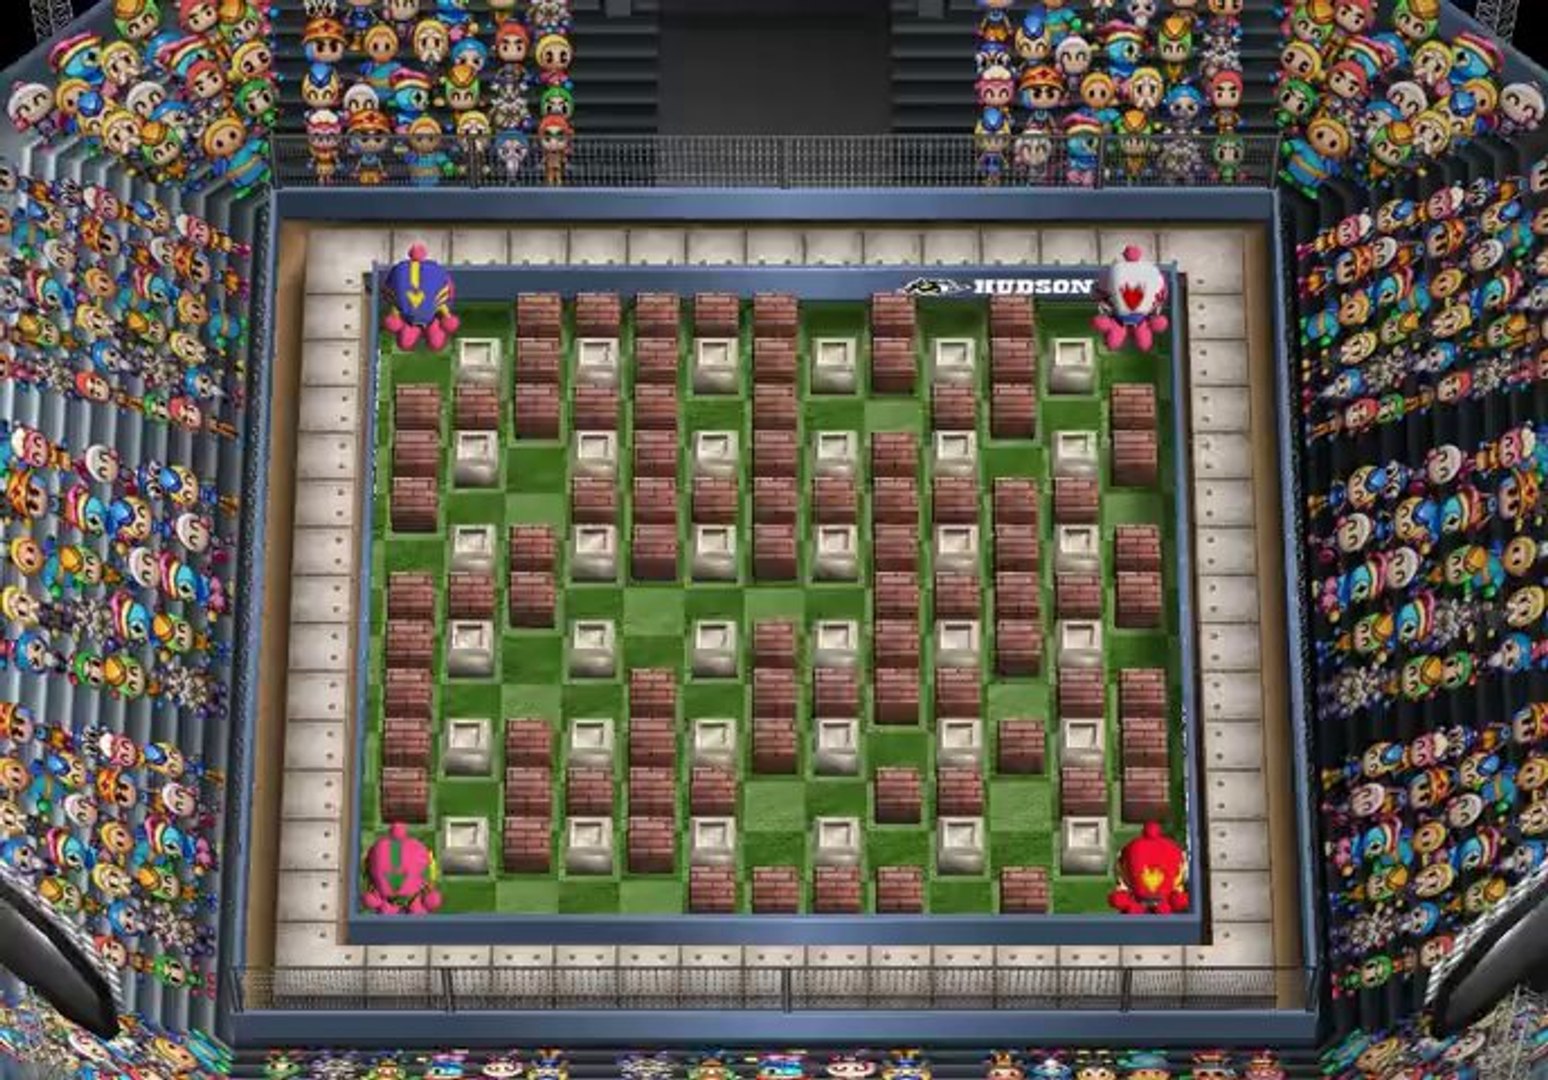 Bomberman Hardball PS2 Gameplay HD (PCSX2) 